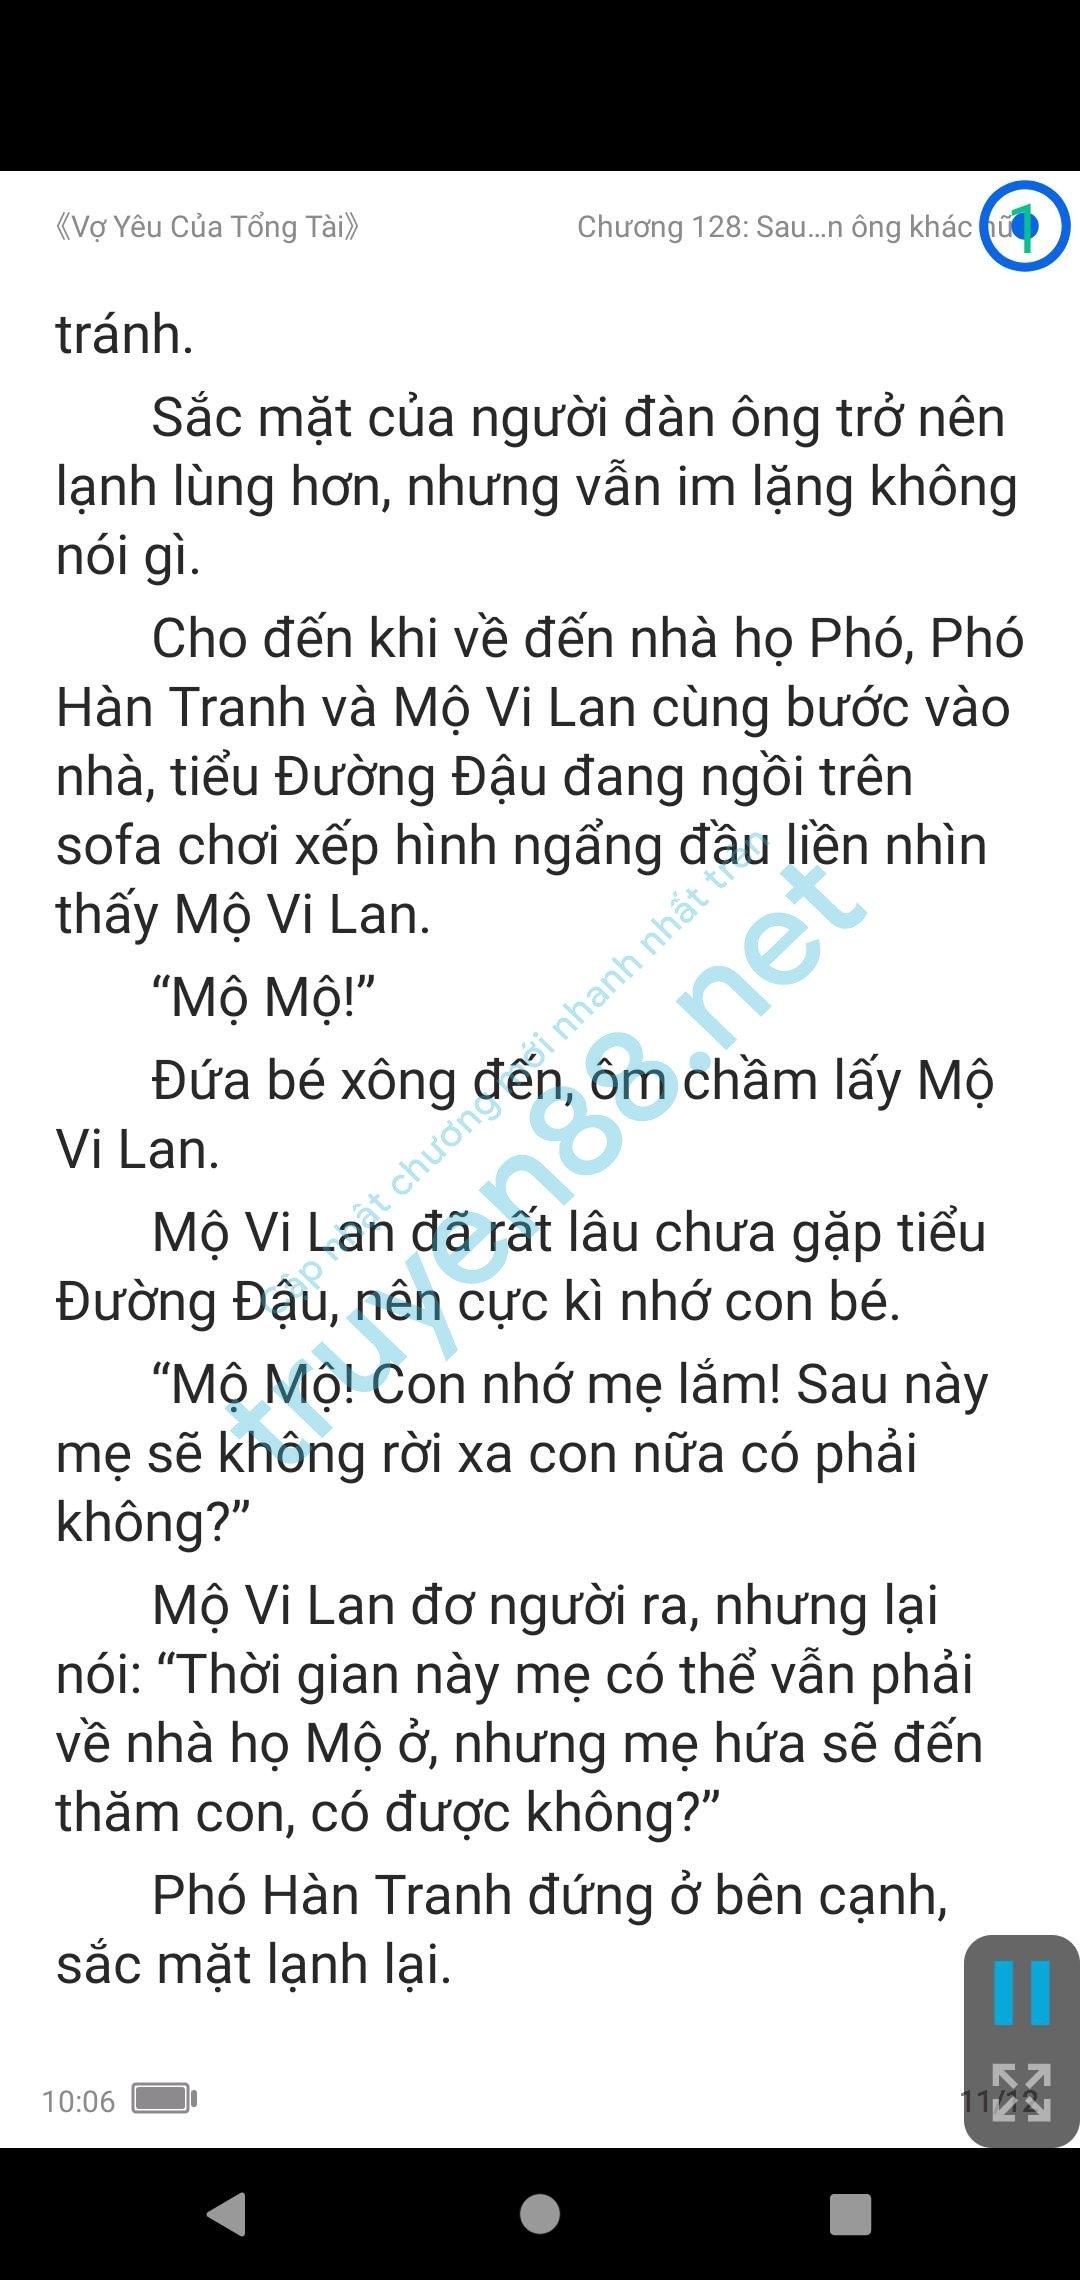 vo-yeu-cua-tong-tai-mo-vi-lan--pho-han-tranh-128-2